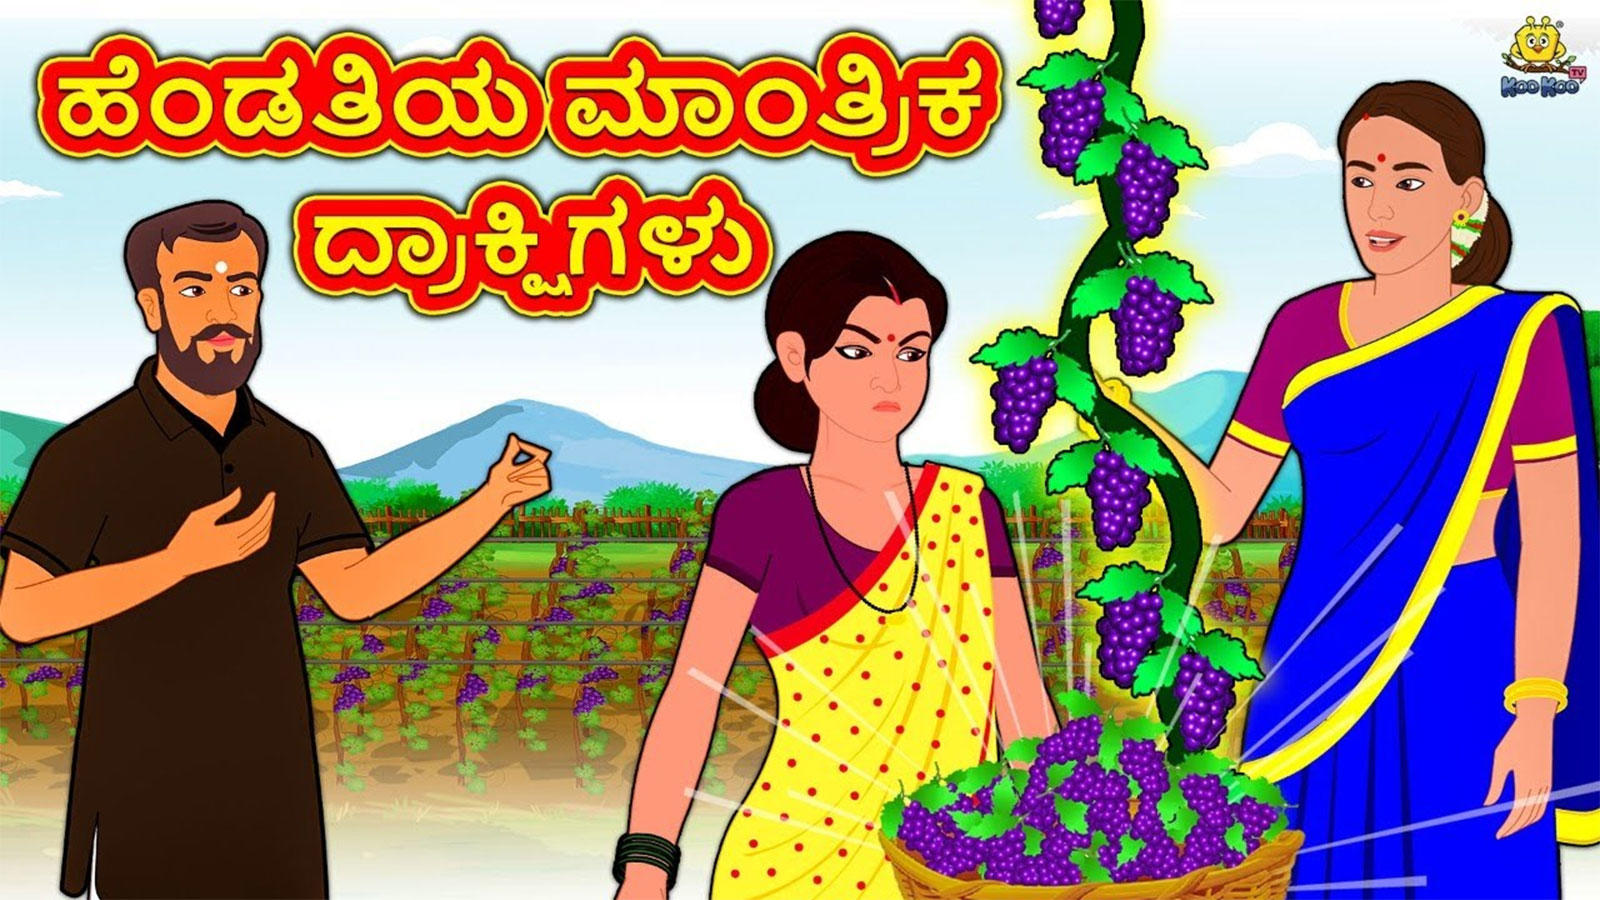 Watch Latest Kids Kannada Nursery Story 'ಹೆಂಡತಿಯ ಮಾಂತ್ರಿಕ ದ್ರಾಕ್ಷಿಗಳು    Wife's Magical Grapes' for Kids   Check Out Children's Nursery Stories,  Baby Songs, Fairy Tales In Kannada